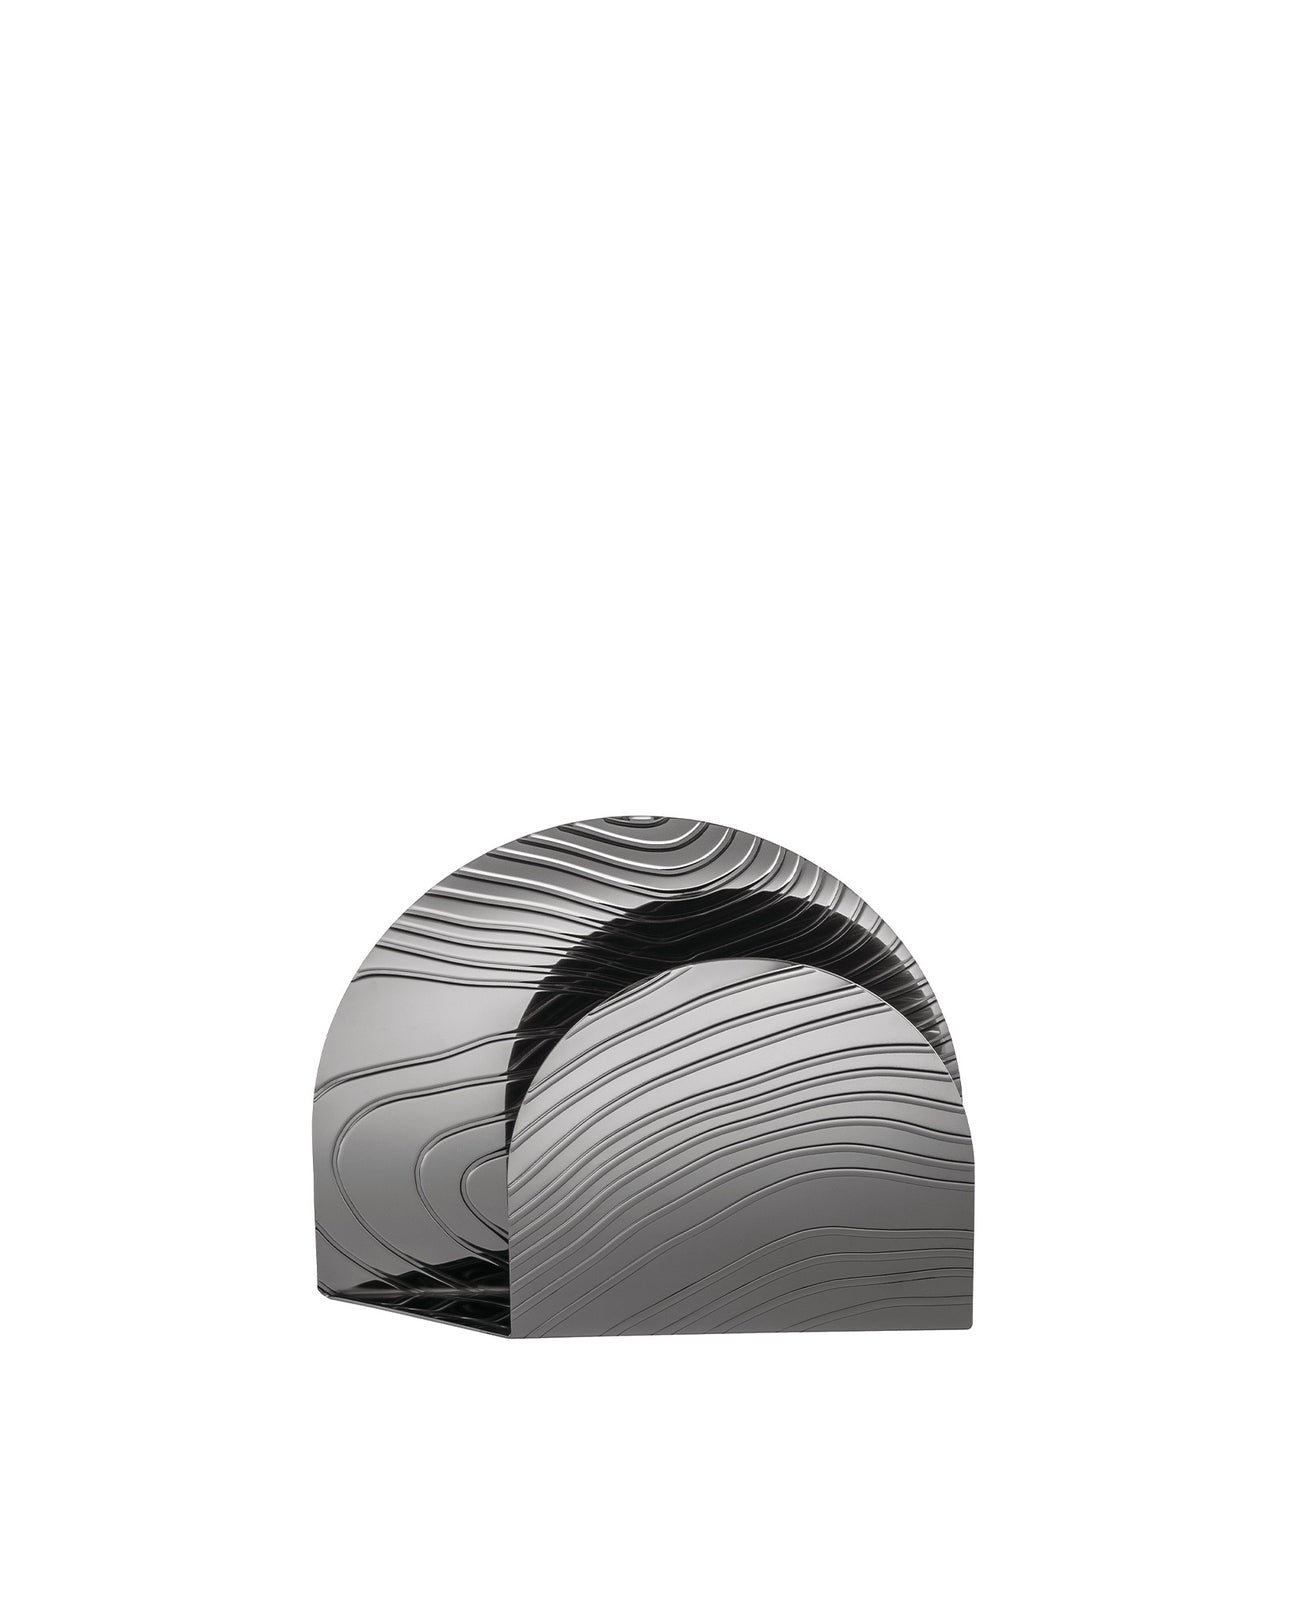 Alessi Serviette Holder Envelope VENEER | Panik Design